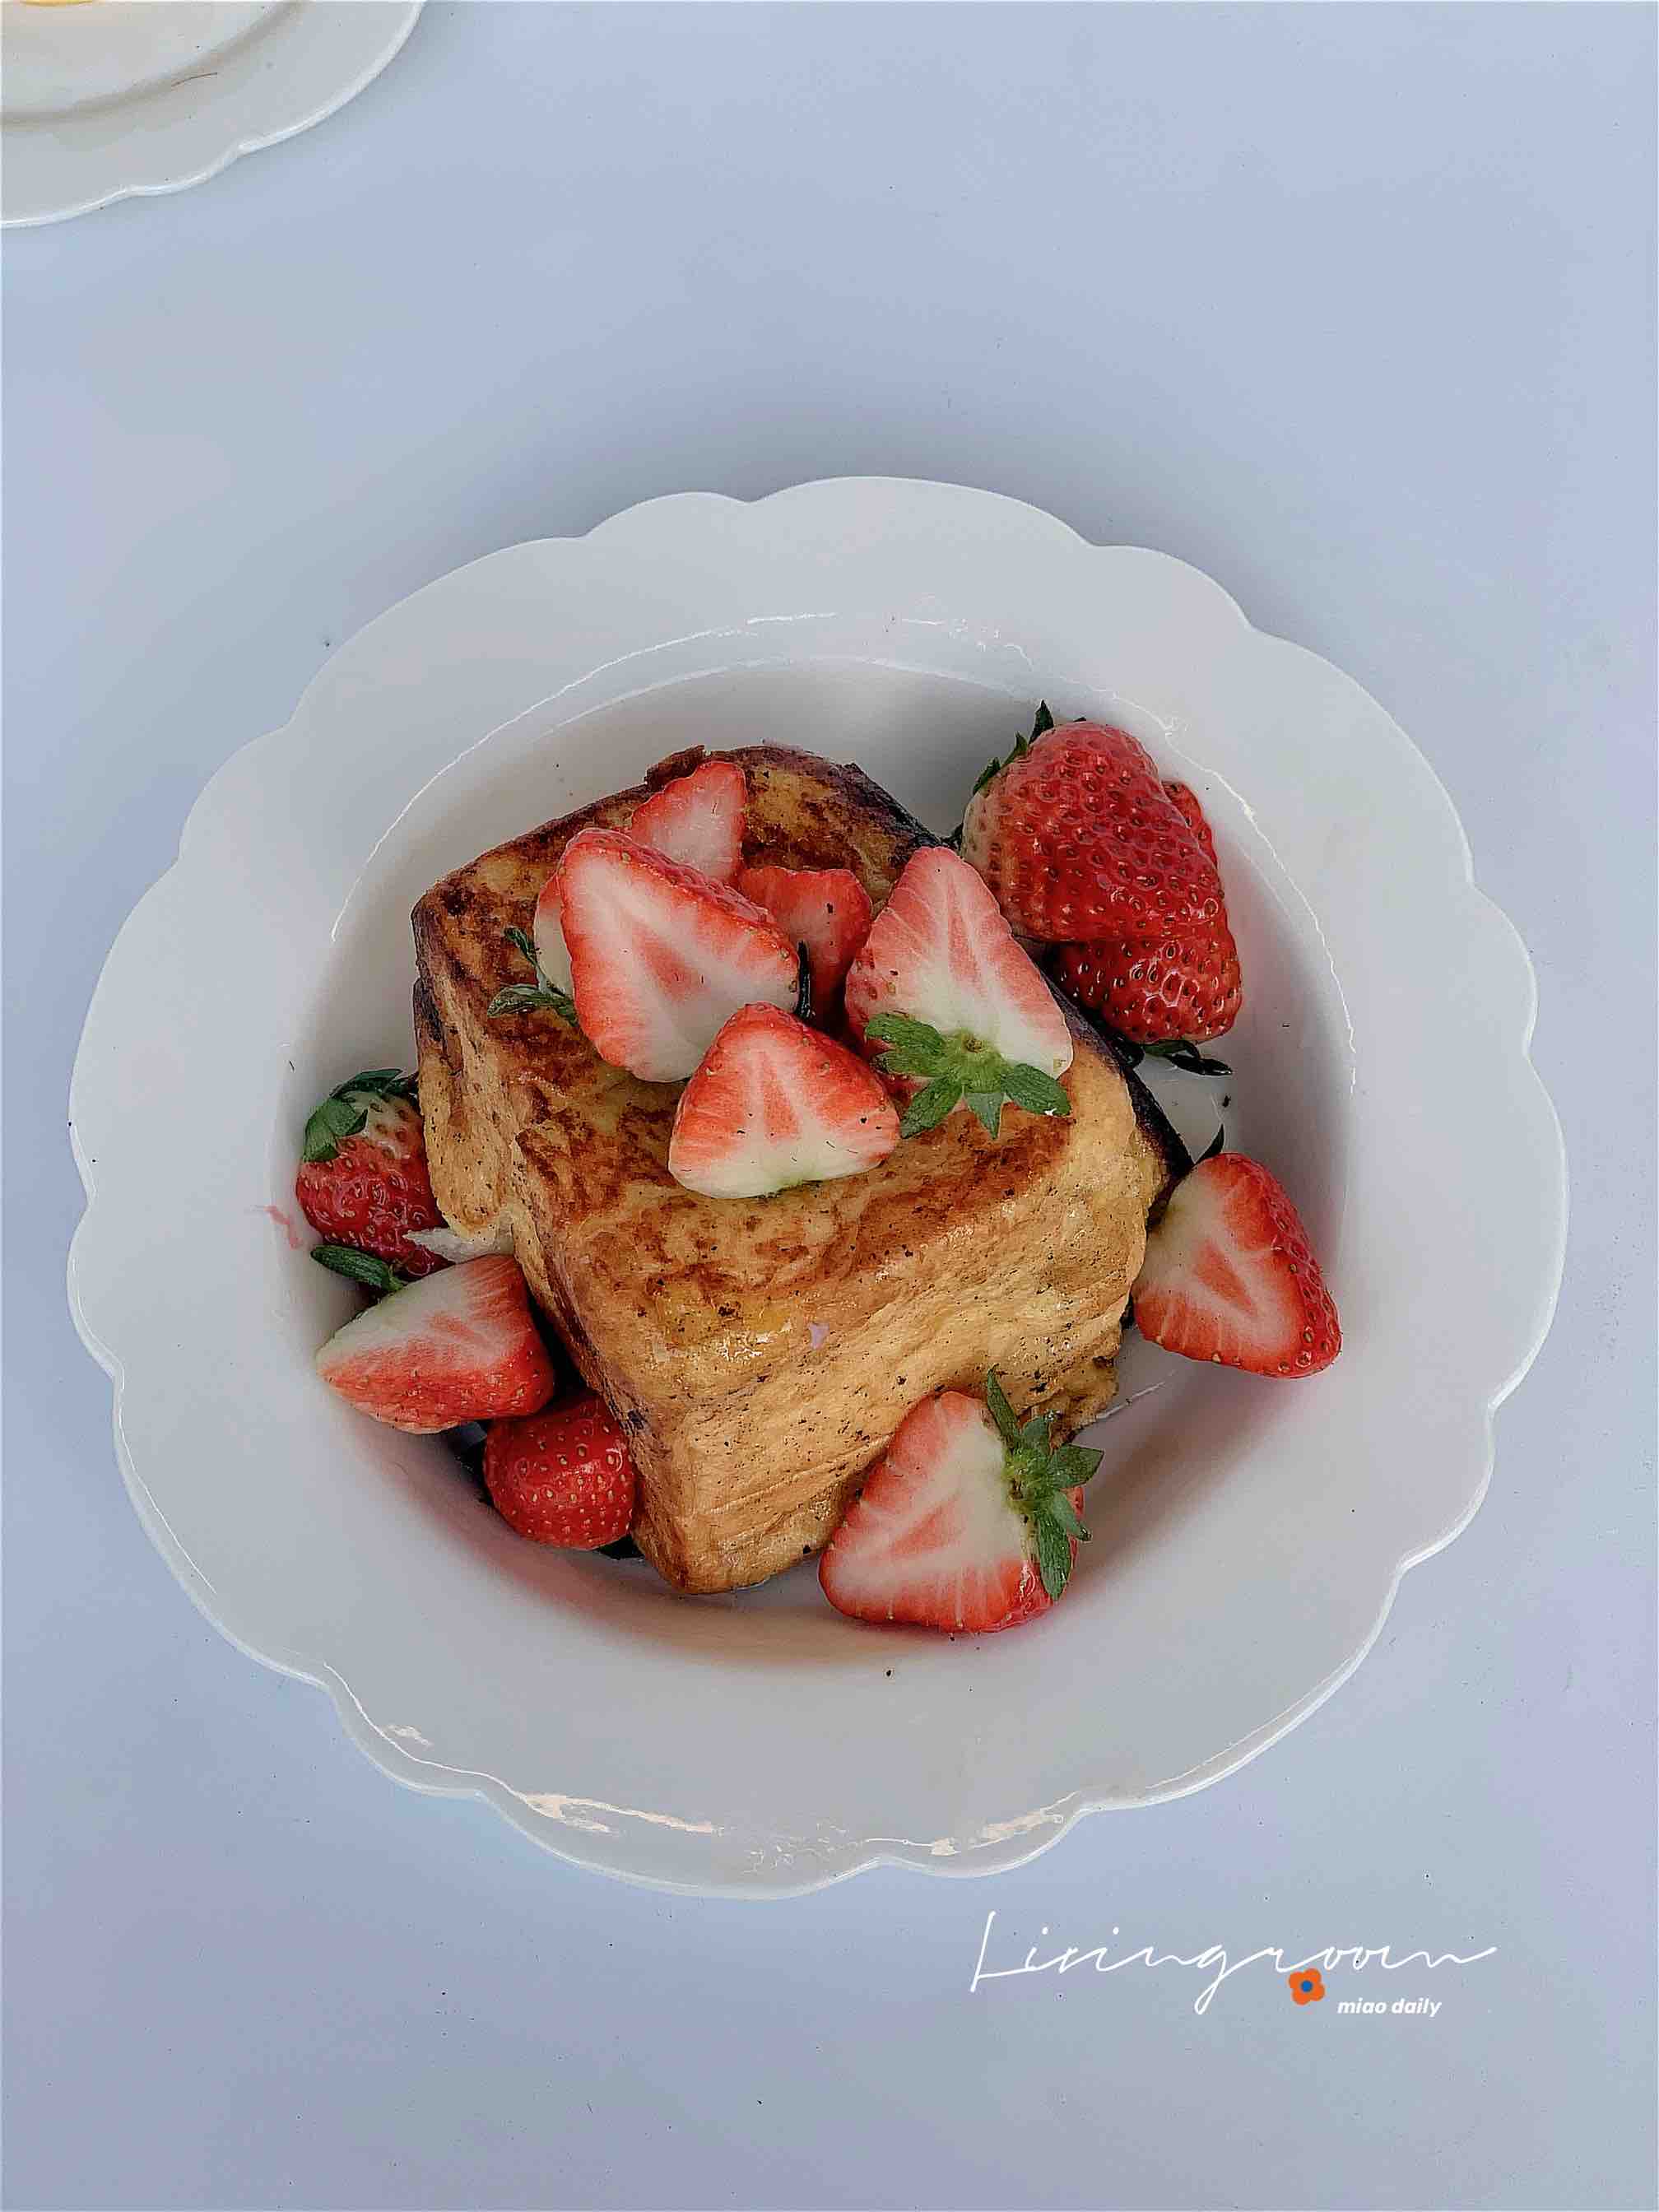 Strawberry French Toast recipe